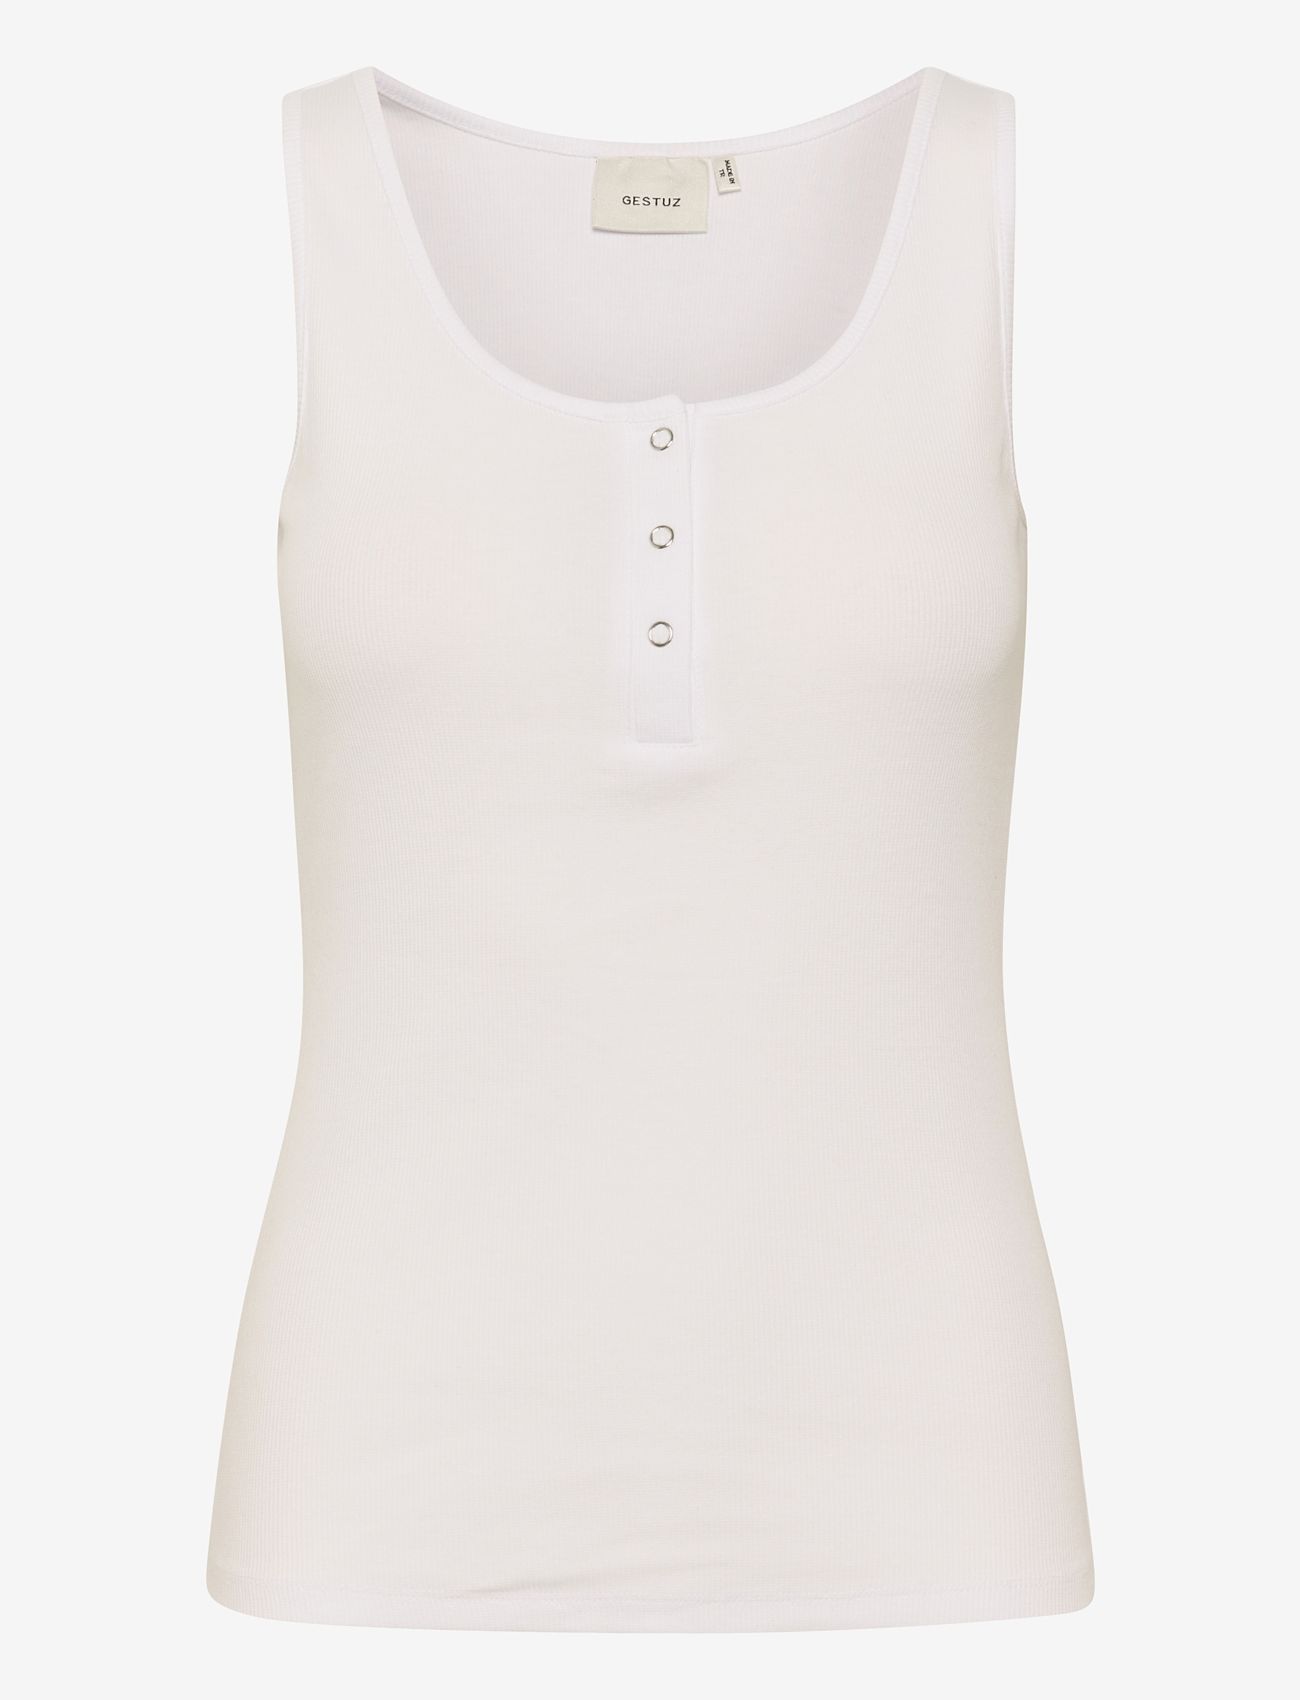 Gestuz - DrewGZ button top NOOS - sleeveless tops - bright white - 1